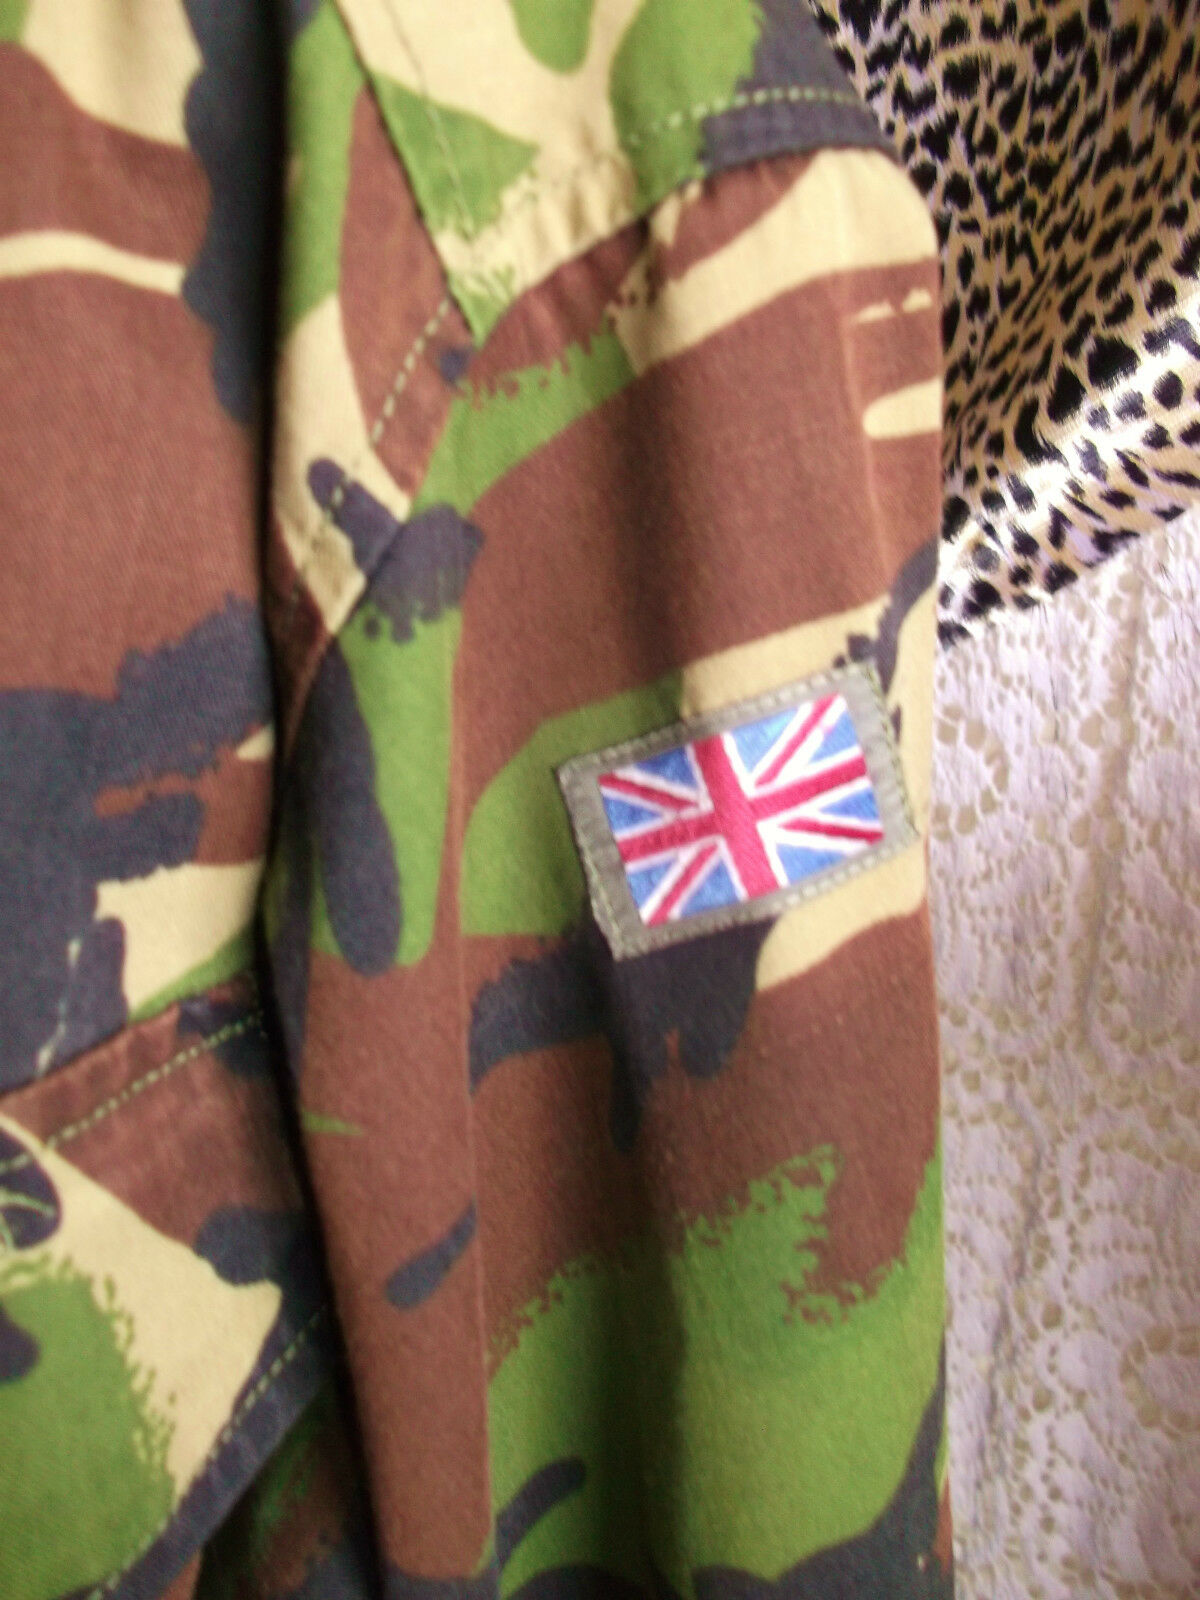 army surplus.British camouflage shirt.long sleeves.zip&button front48"chest Wonkey Donkey Bazaar